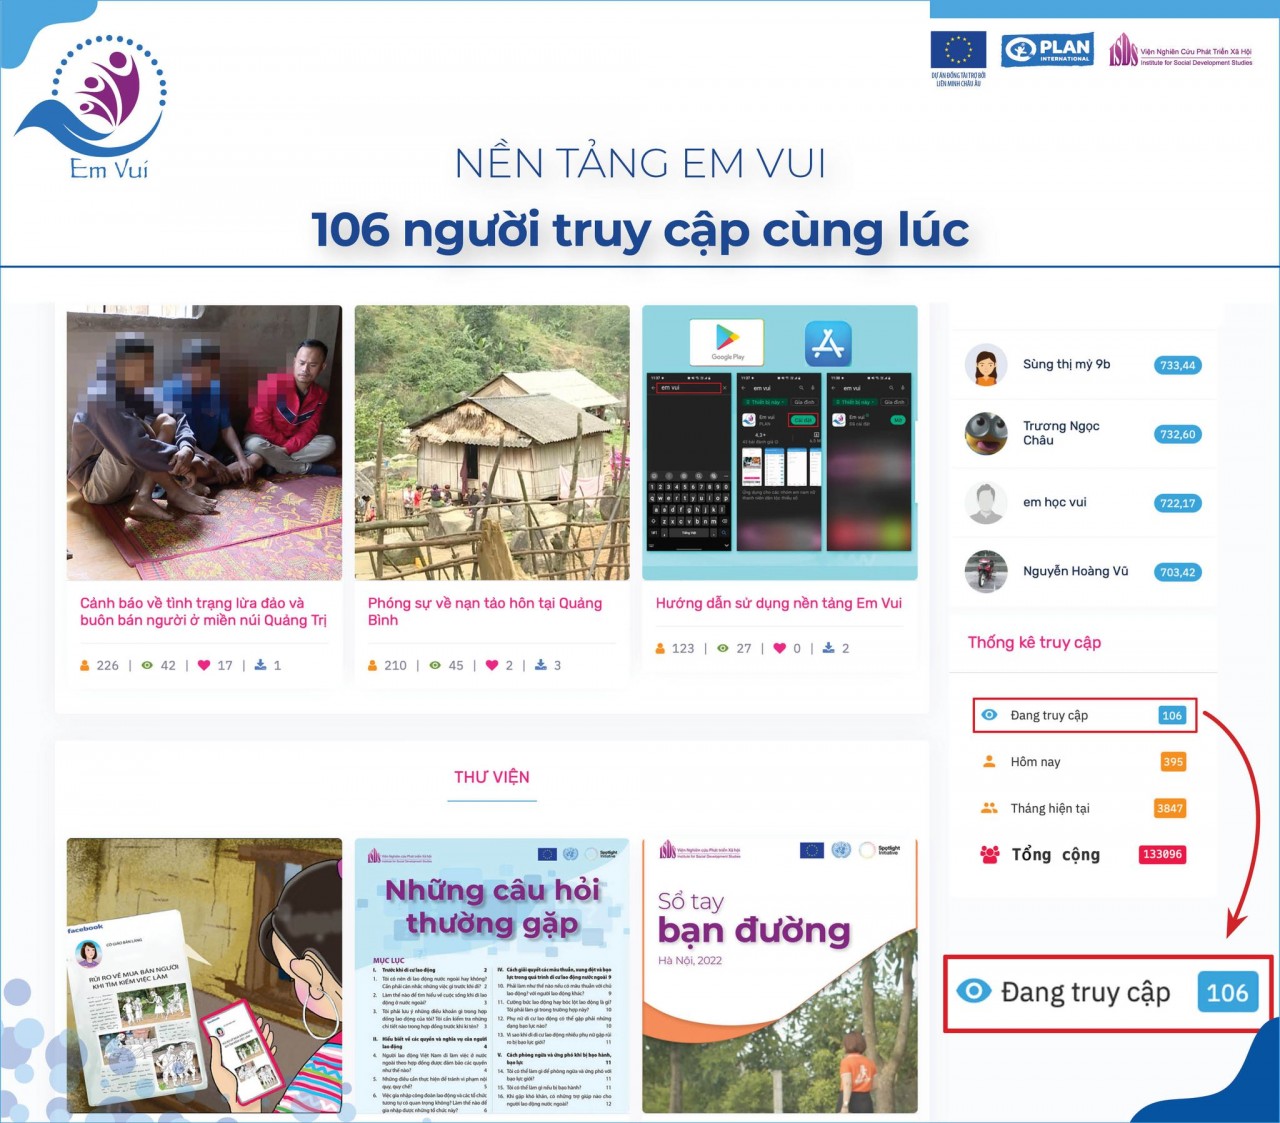 The “Em vui” digital platform on website.